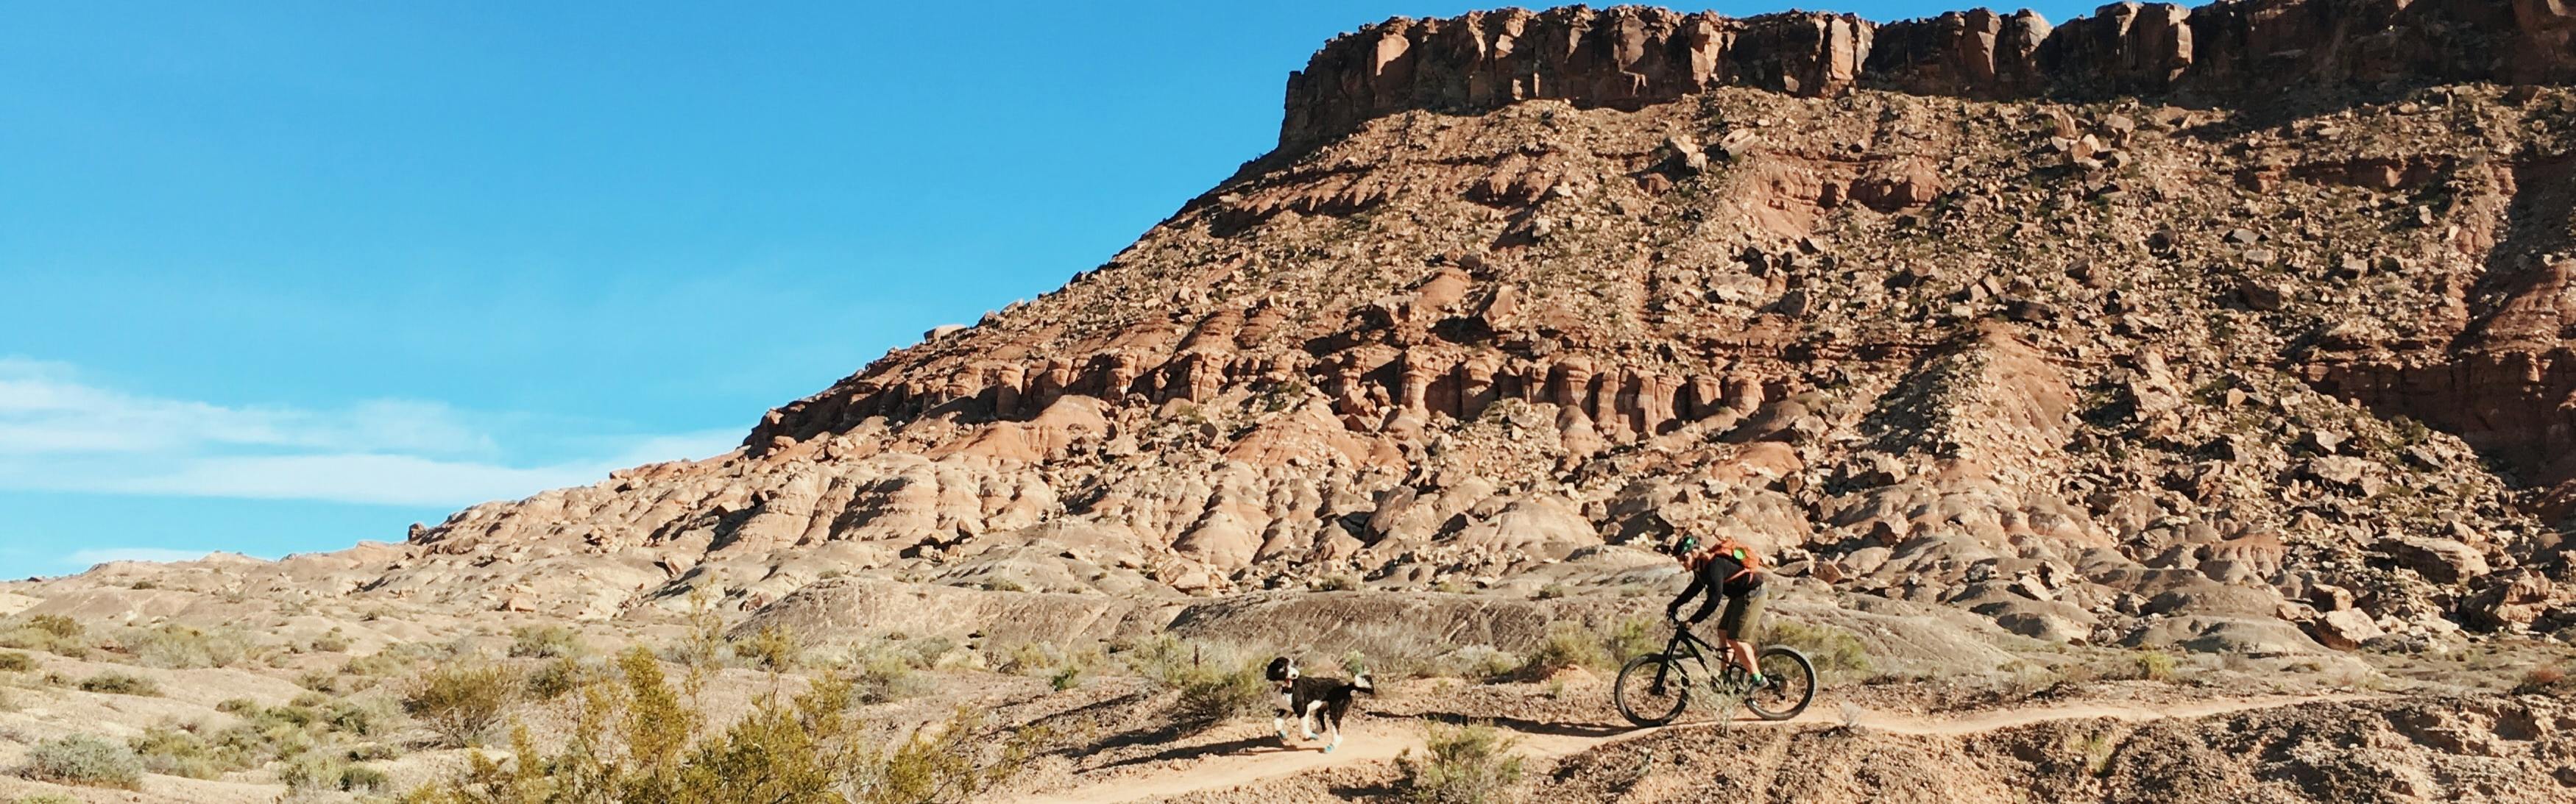 A biker biking in the desert with a dog.